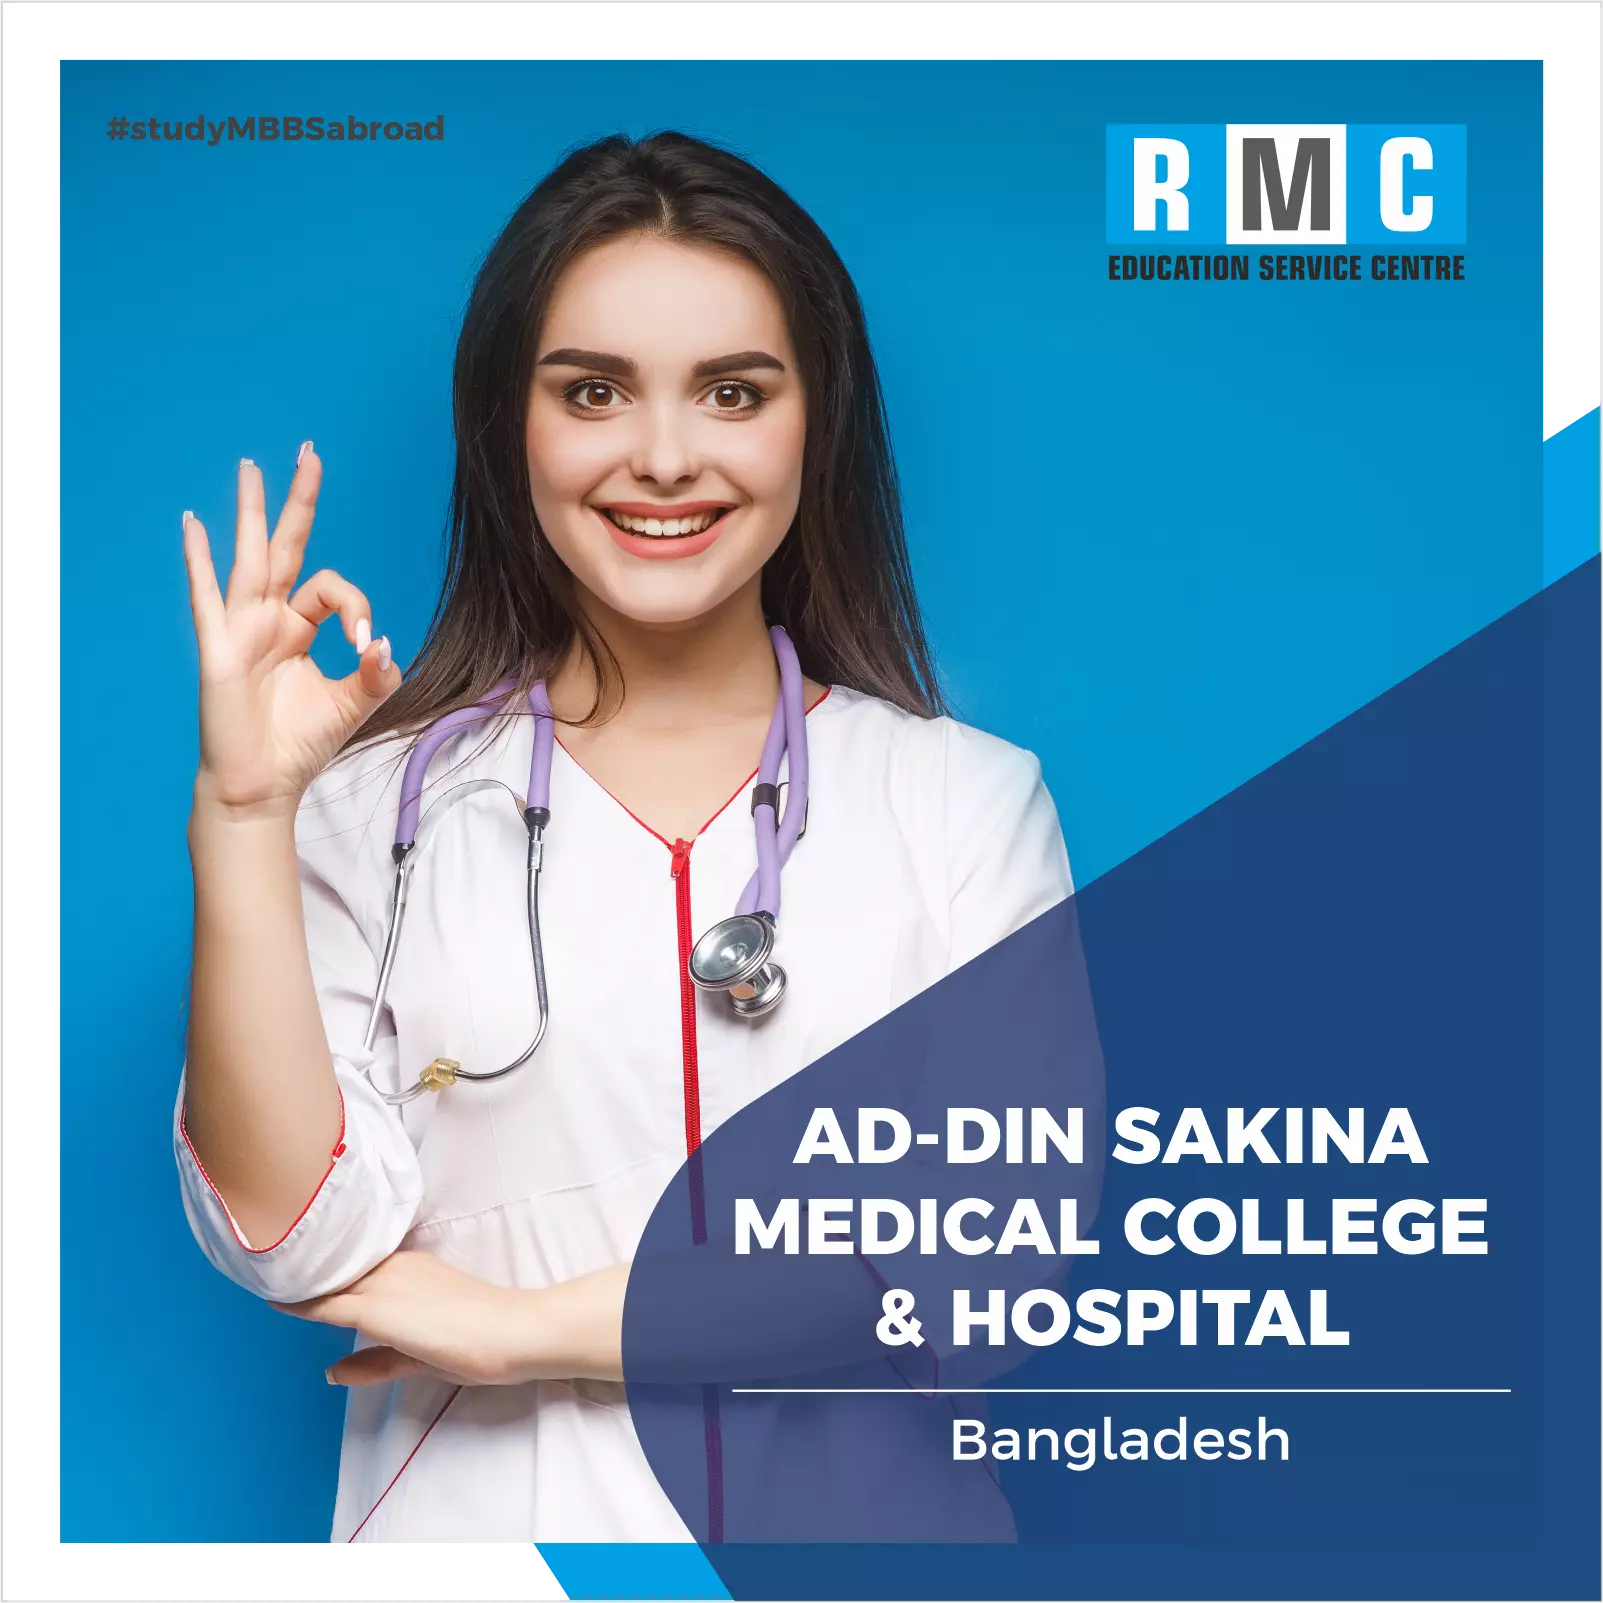 Ad-din Sakina Medical College and Hospital